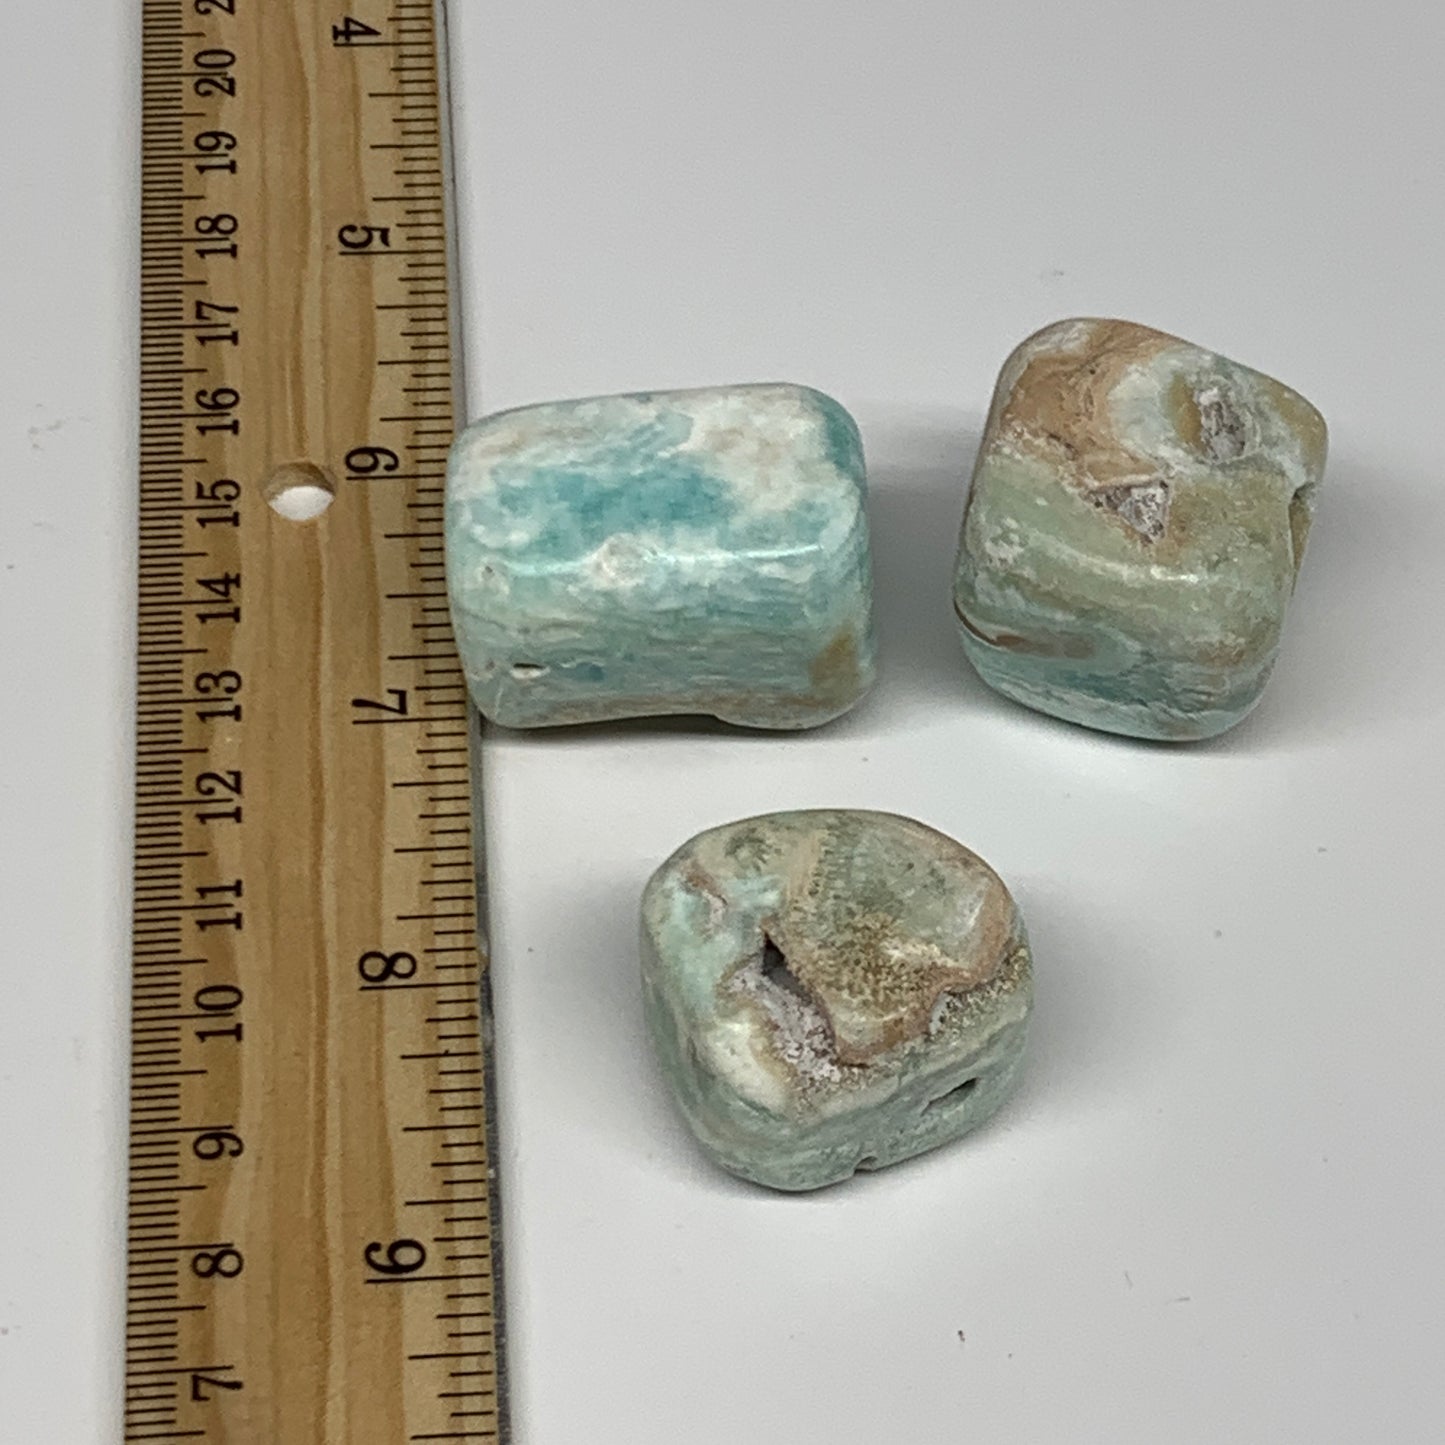 100.9g, 1"-1.3", 3pcs, Blue Aragonite Tumbled Stones @Afghanistan, B26968